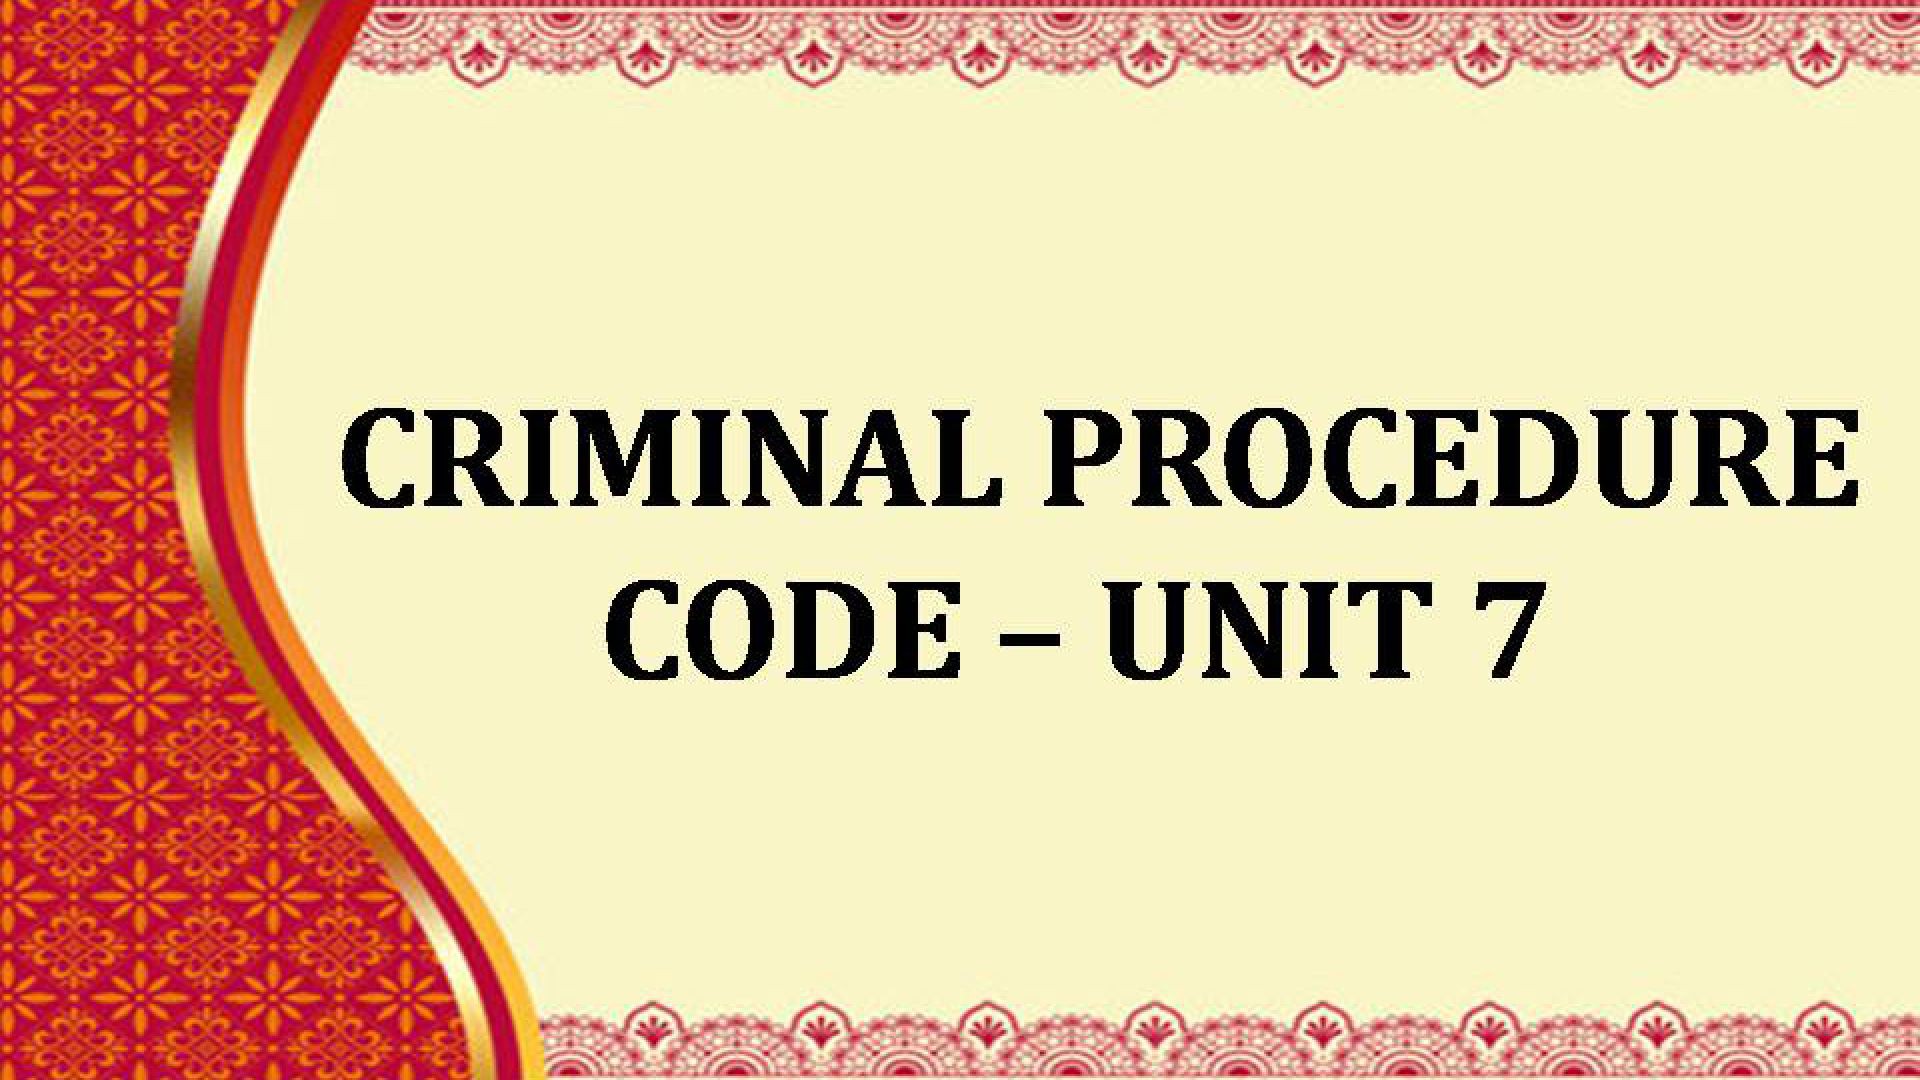 CRIMINAL PROCEDURE CODE Unit - 7